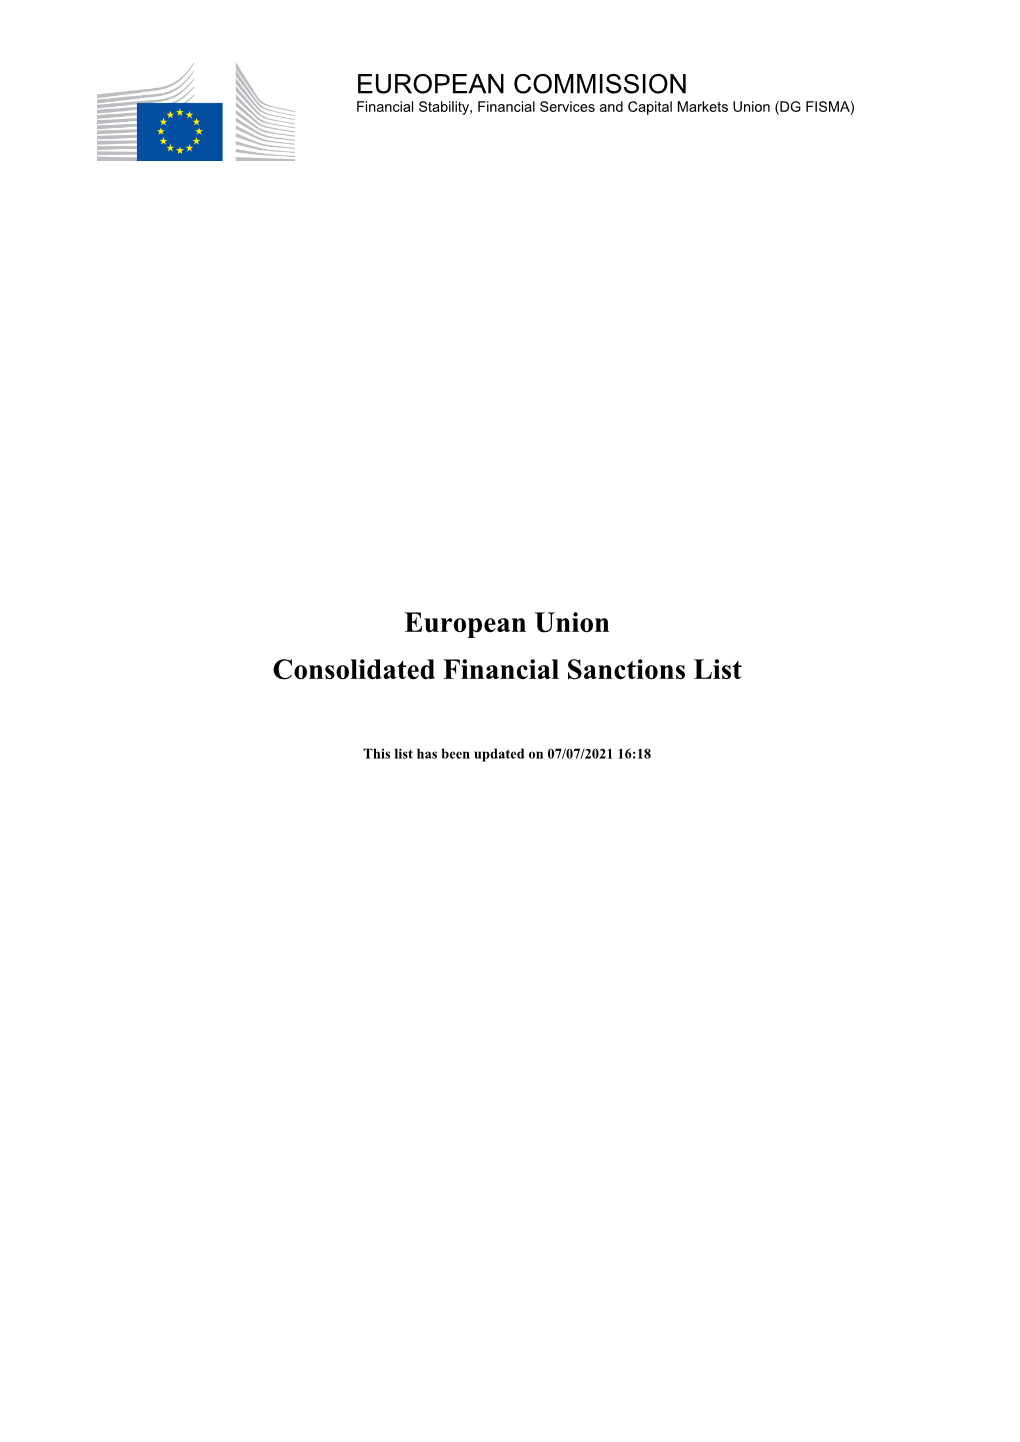 European Union Consolidated Financial Sanctions List